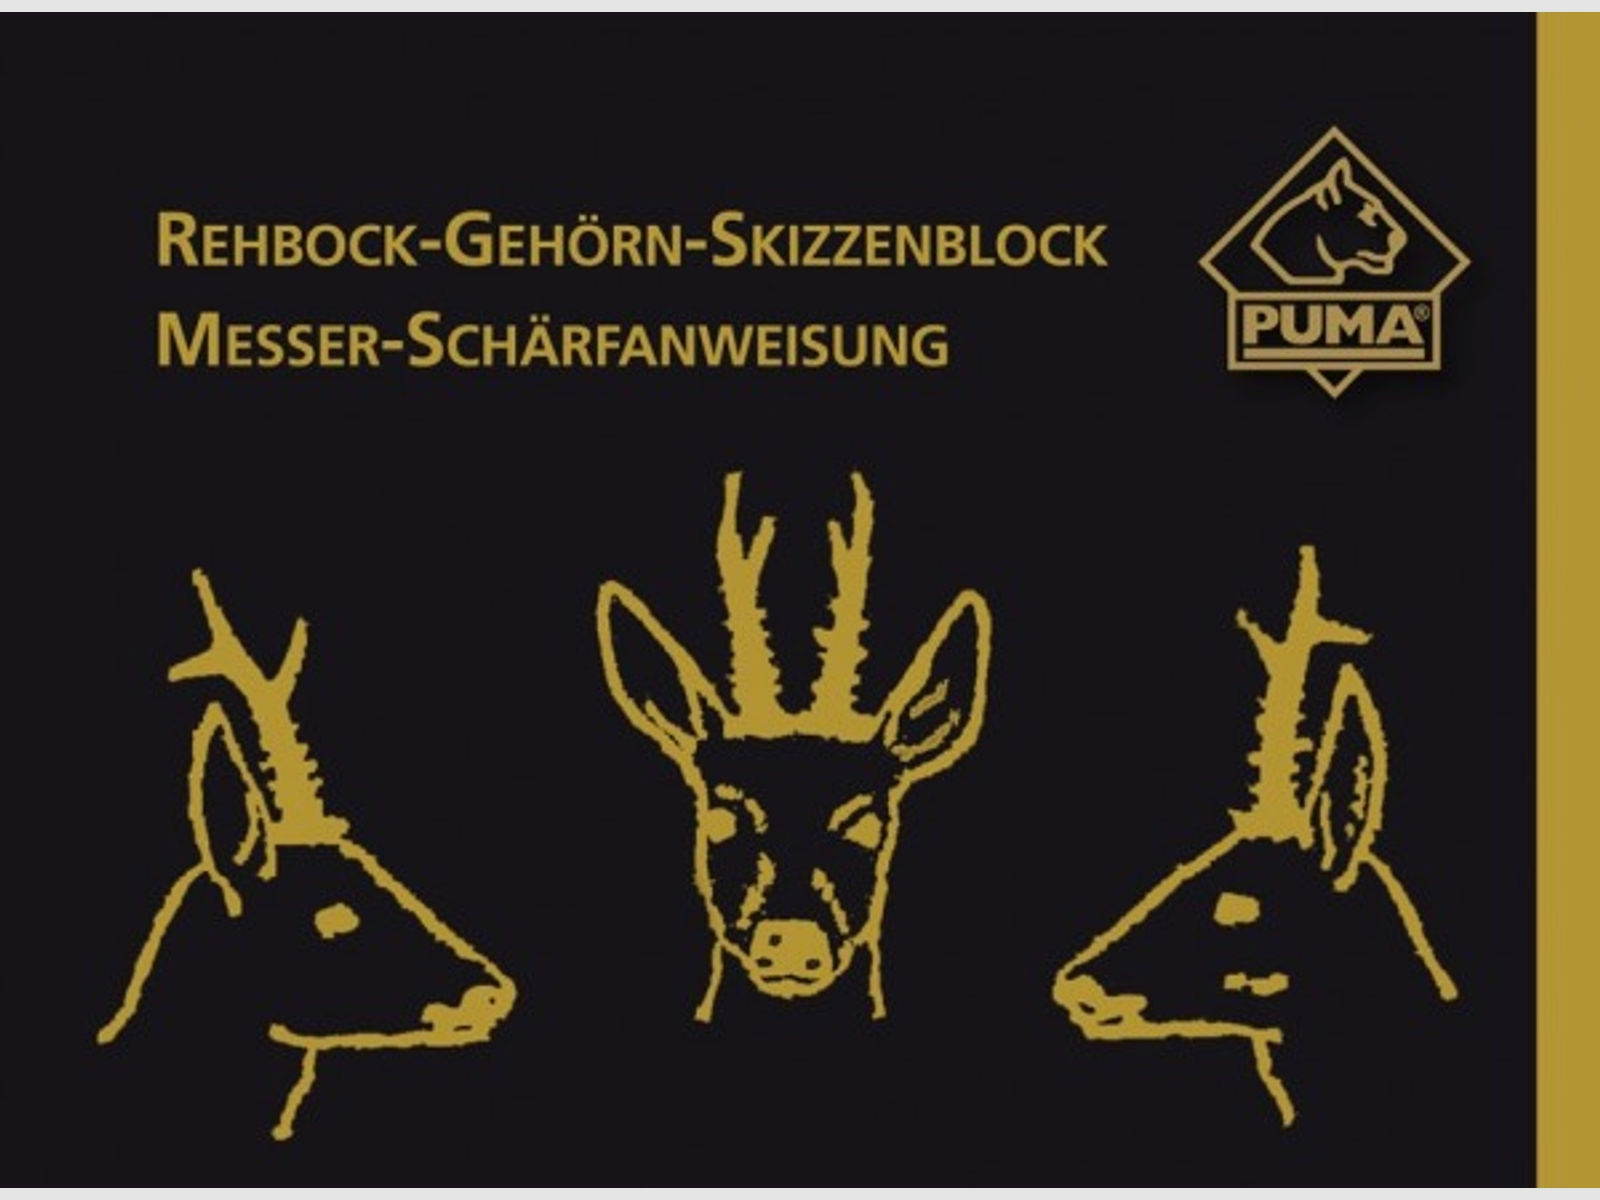 PUMA Rehbock-Gehörn-Skizzenblock